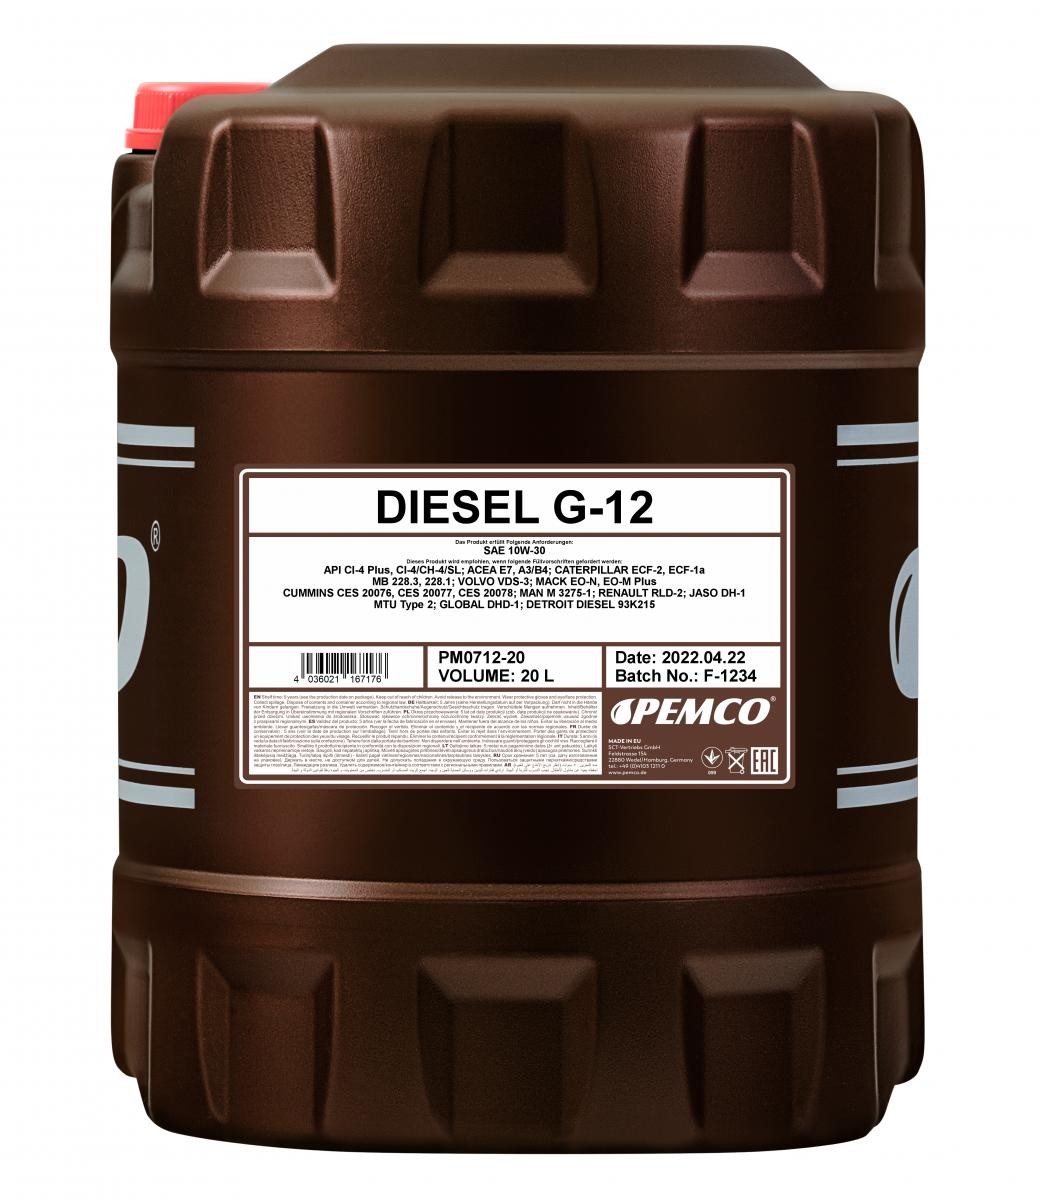 Car oil API CG 4 PEMCO - PM0712-20 Truck SHPD, DIESEL G-12